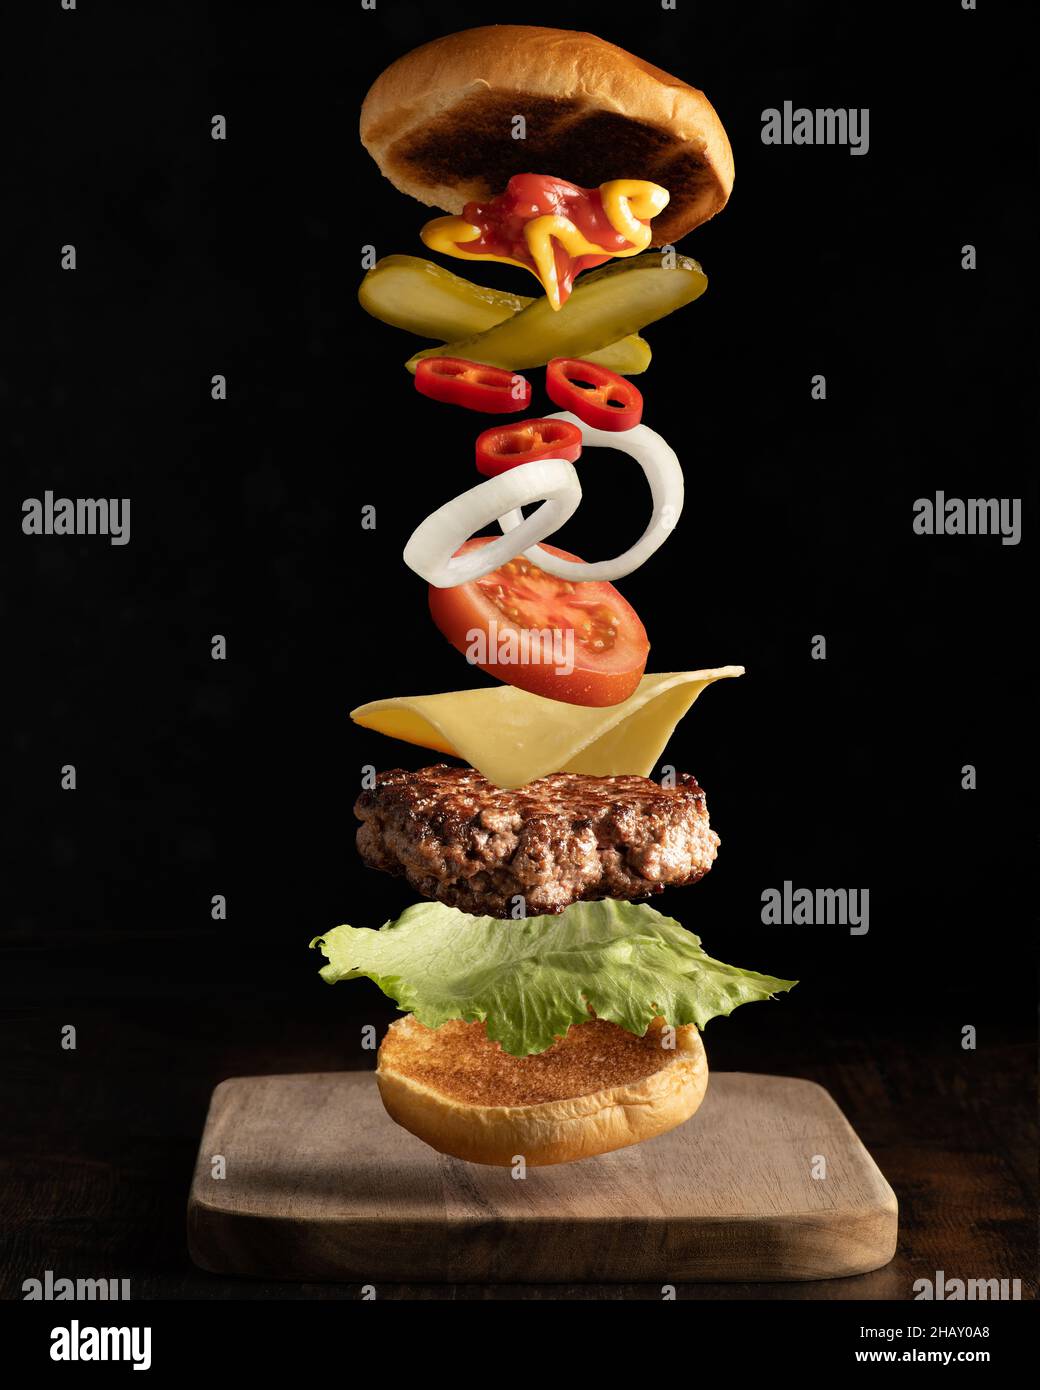 Plain hamburger hi-res stock photography and images - Alamy